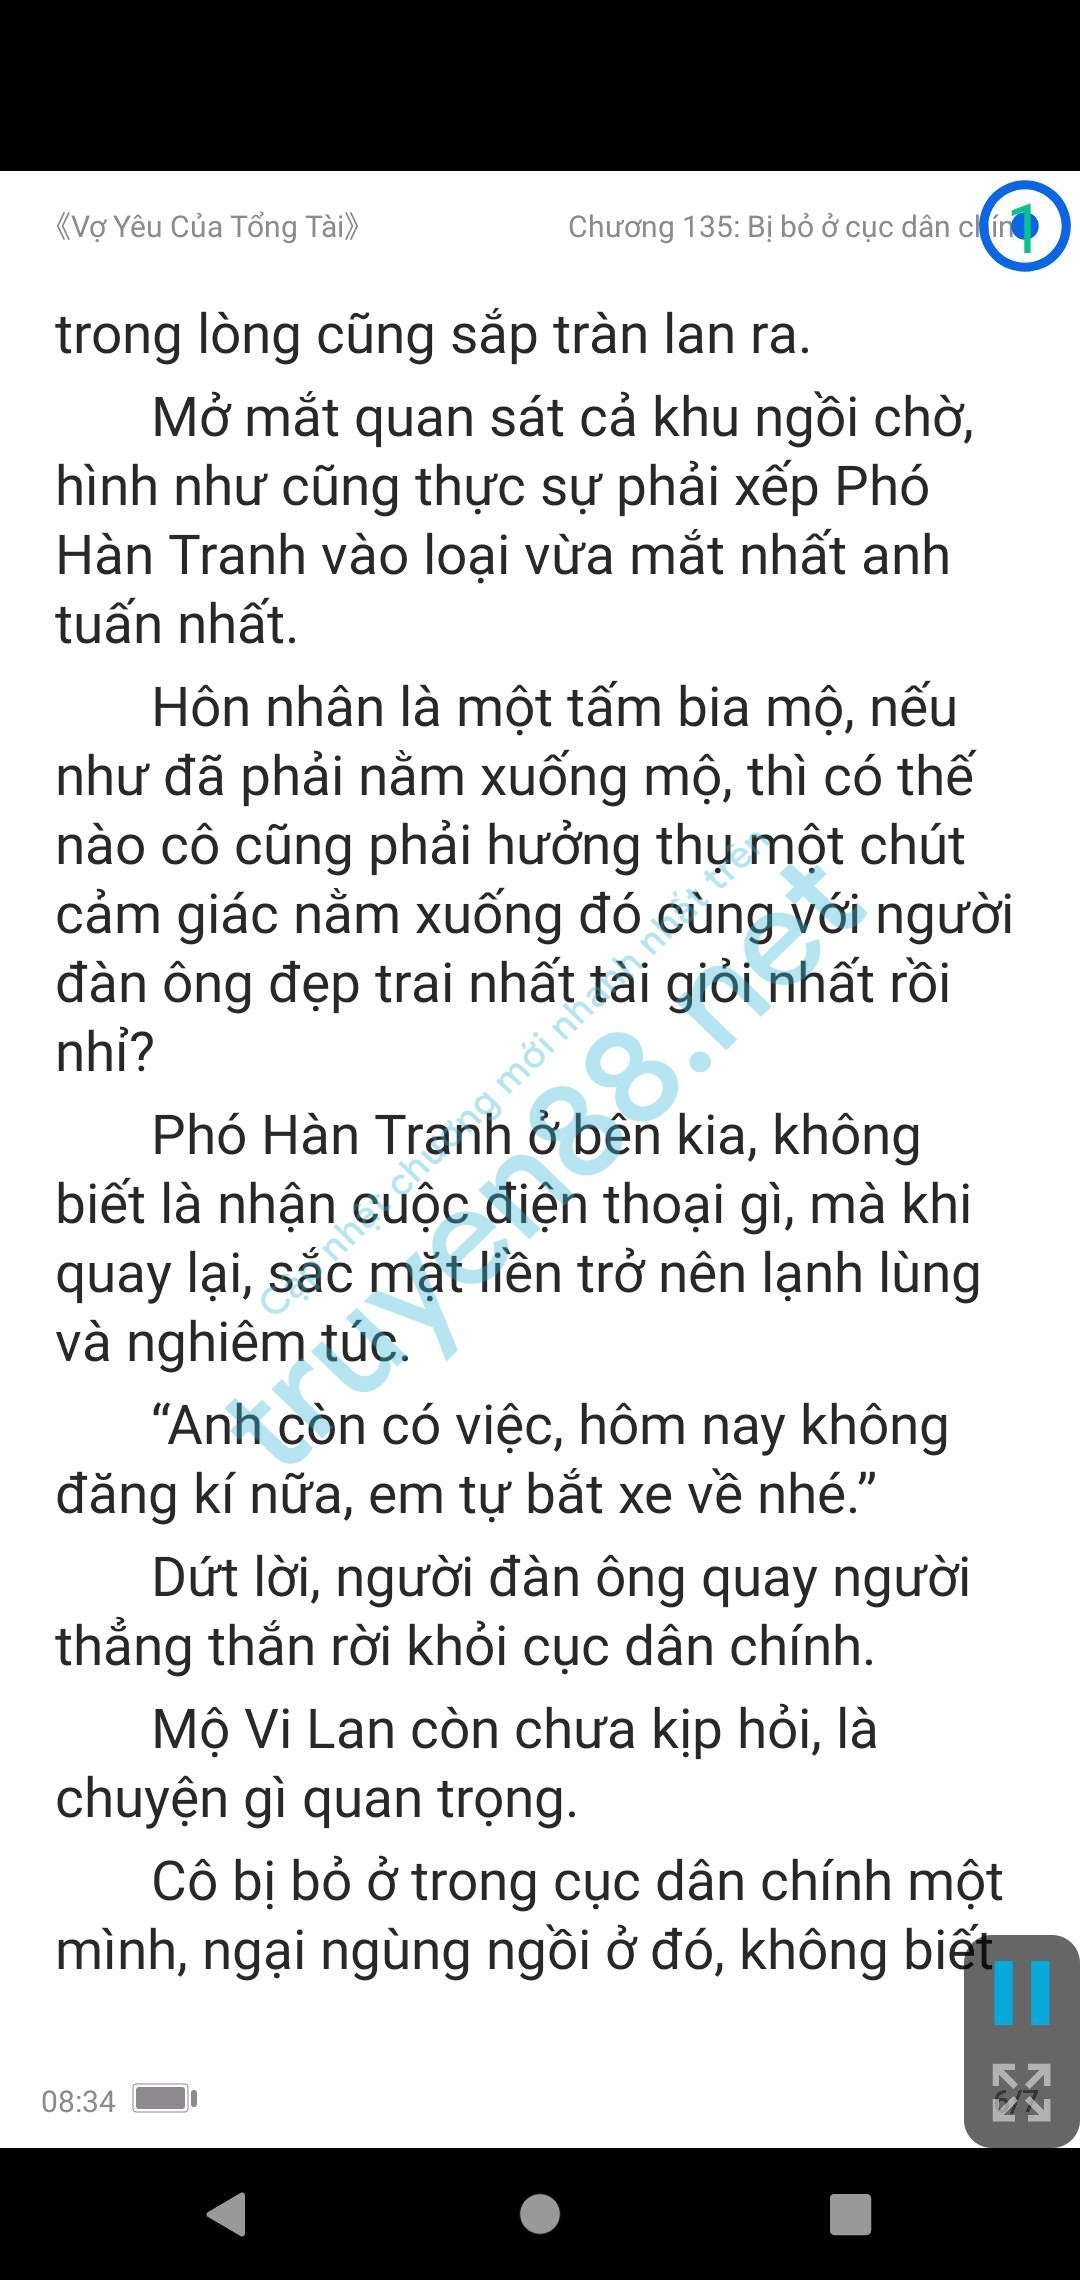 vo-yeu-cua-tong-tai-mo-vi-lan--pho-han-tranh-135-2